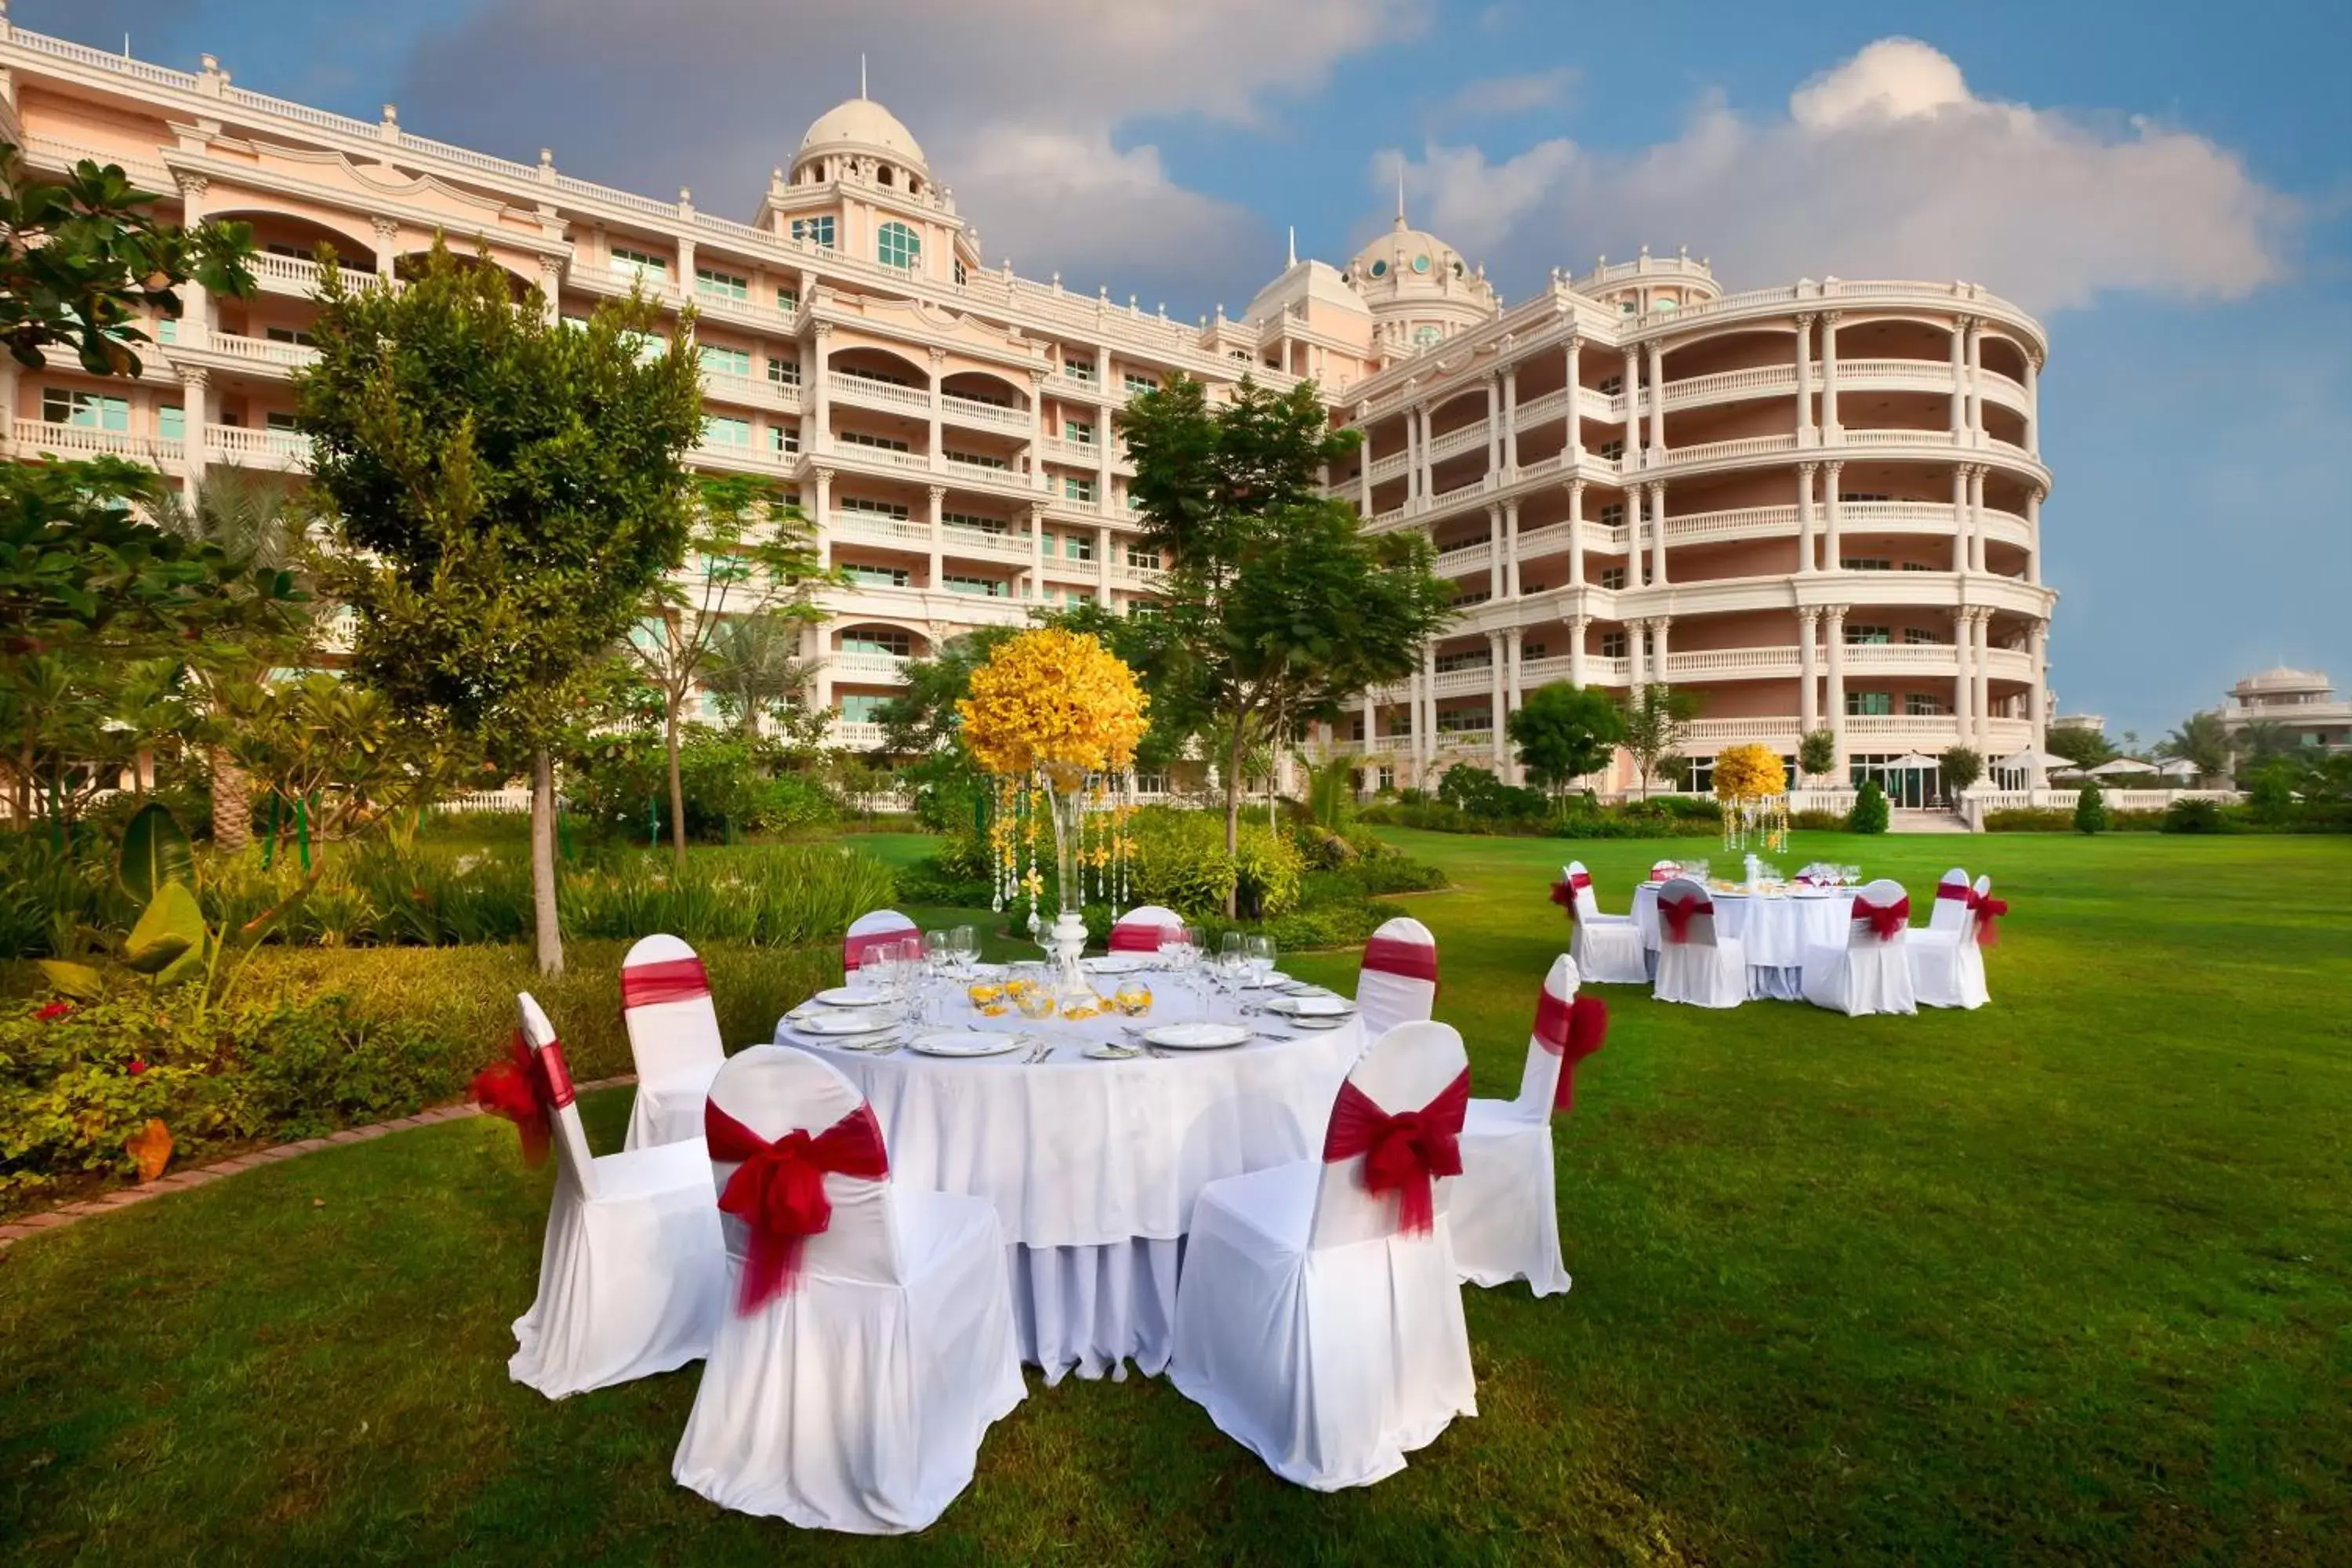 Banquet/Function facilities, Banquet Facilities in Kempinski Hotel & Residences Palm Jumeirah